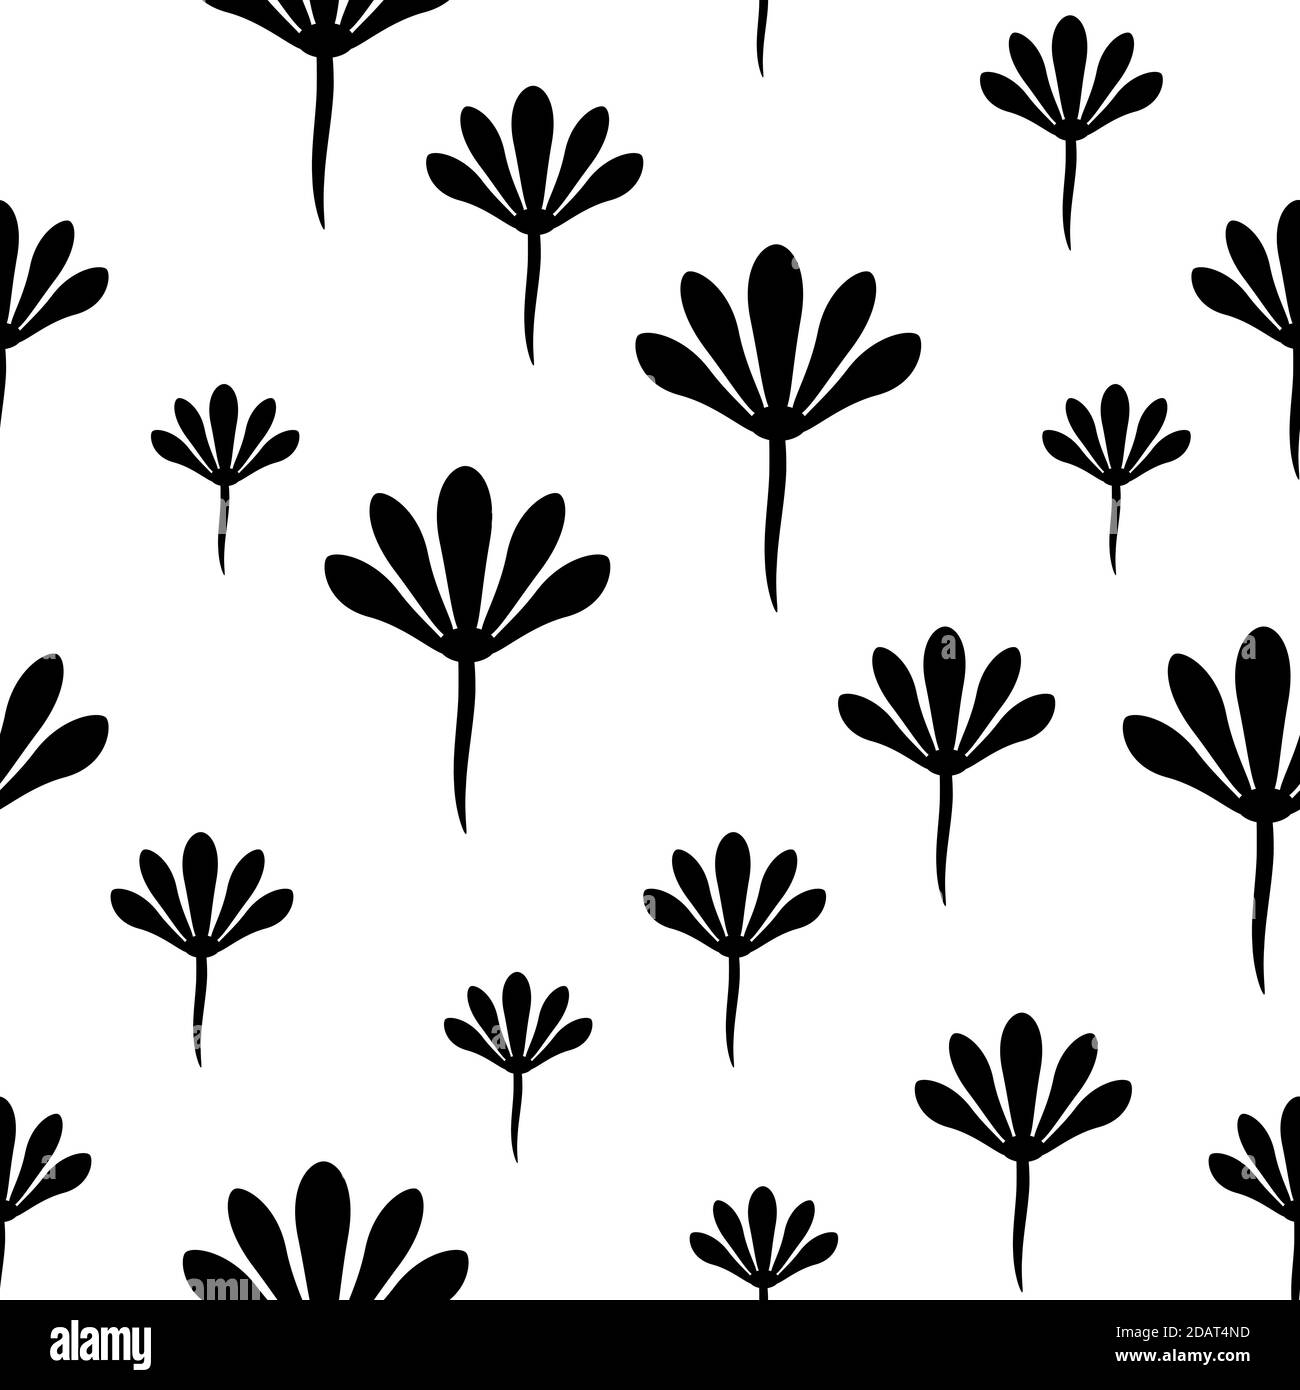 Textura floral sin costuras con flores negras dibujadas a mano. Fondo  blanco. Ilustración vectorial con ramitas. Ornamento para imprimir sobre  tela, pape Imagen Vector de stock - Alamy